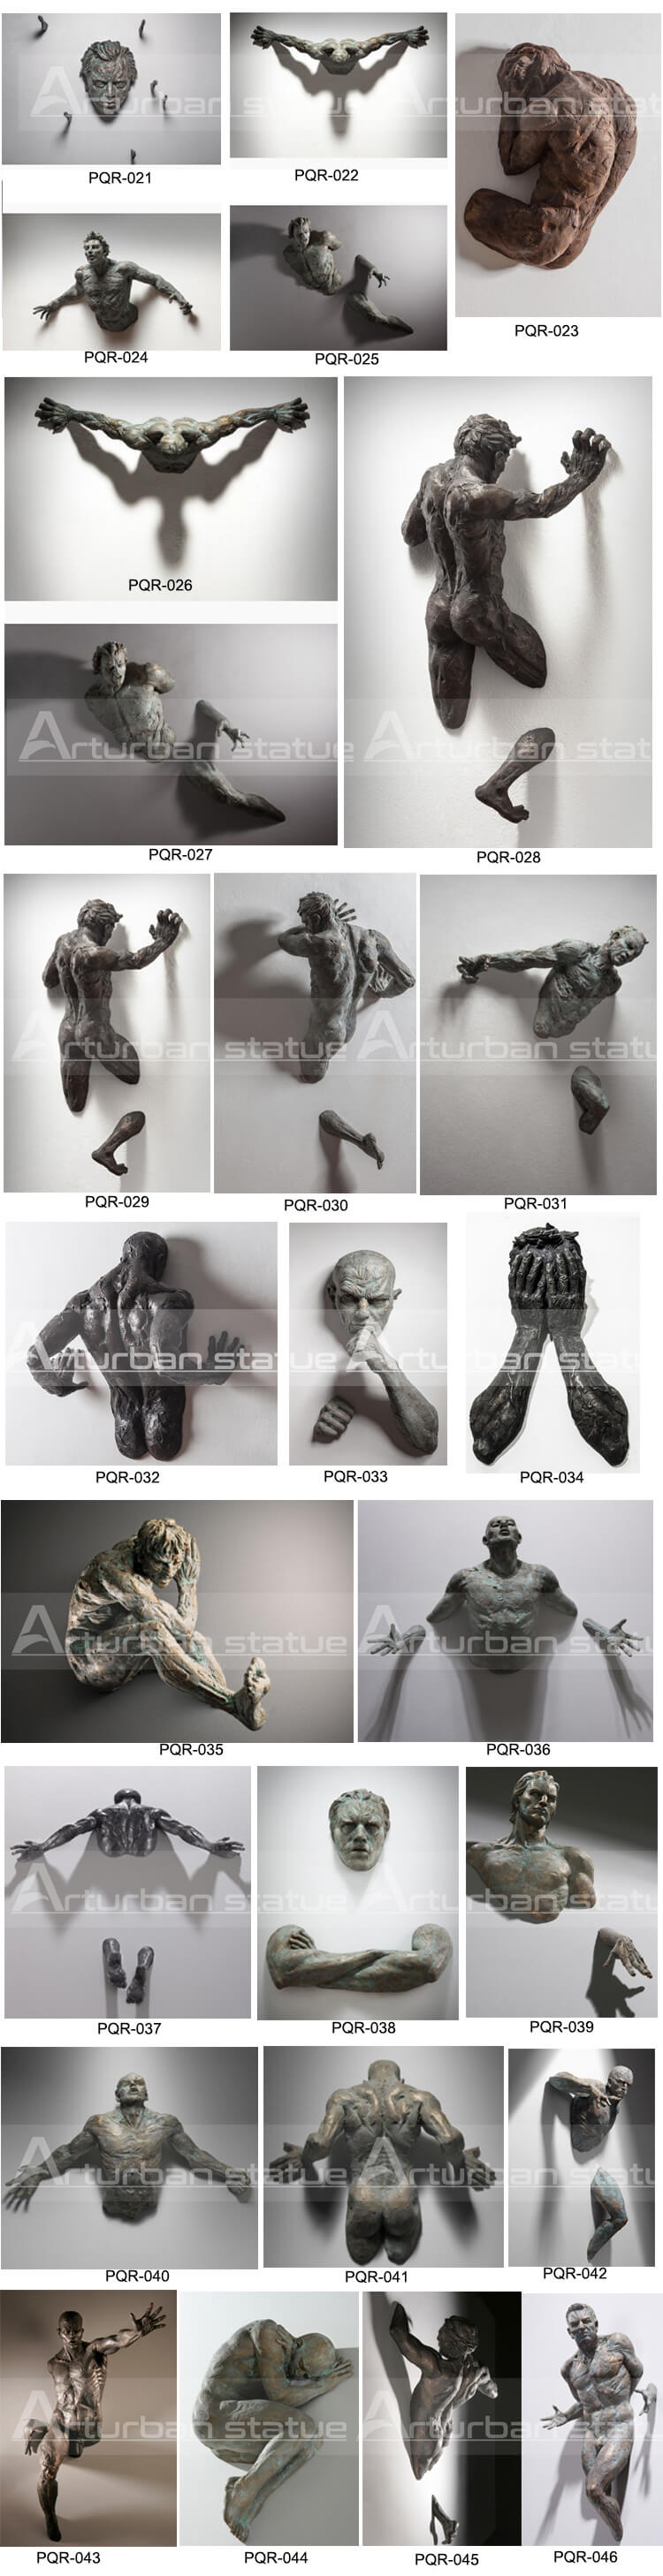 Similiar Matteo Pugliese sculpture for sale